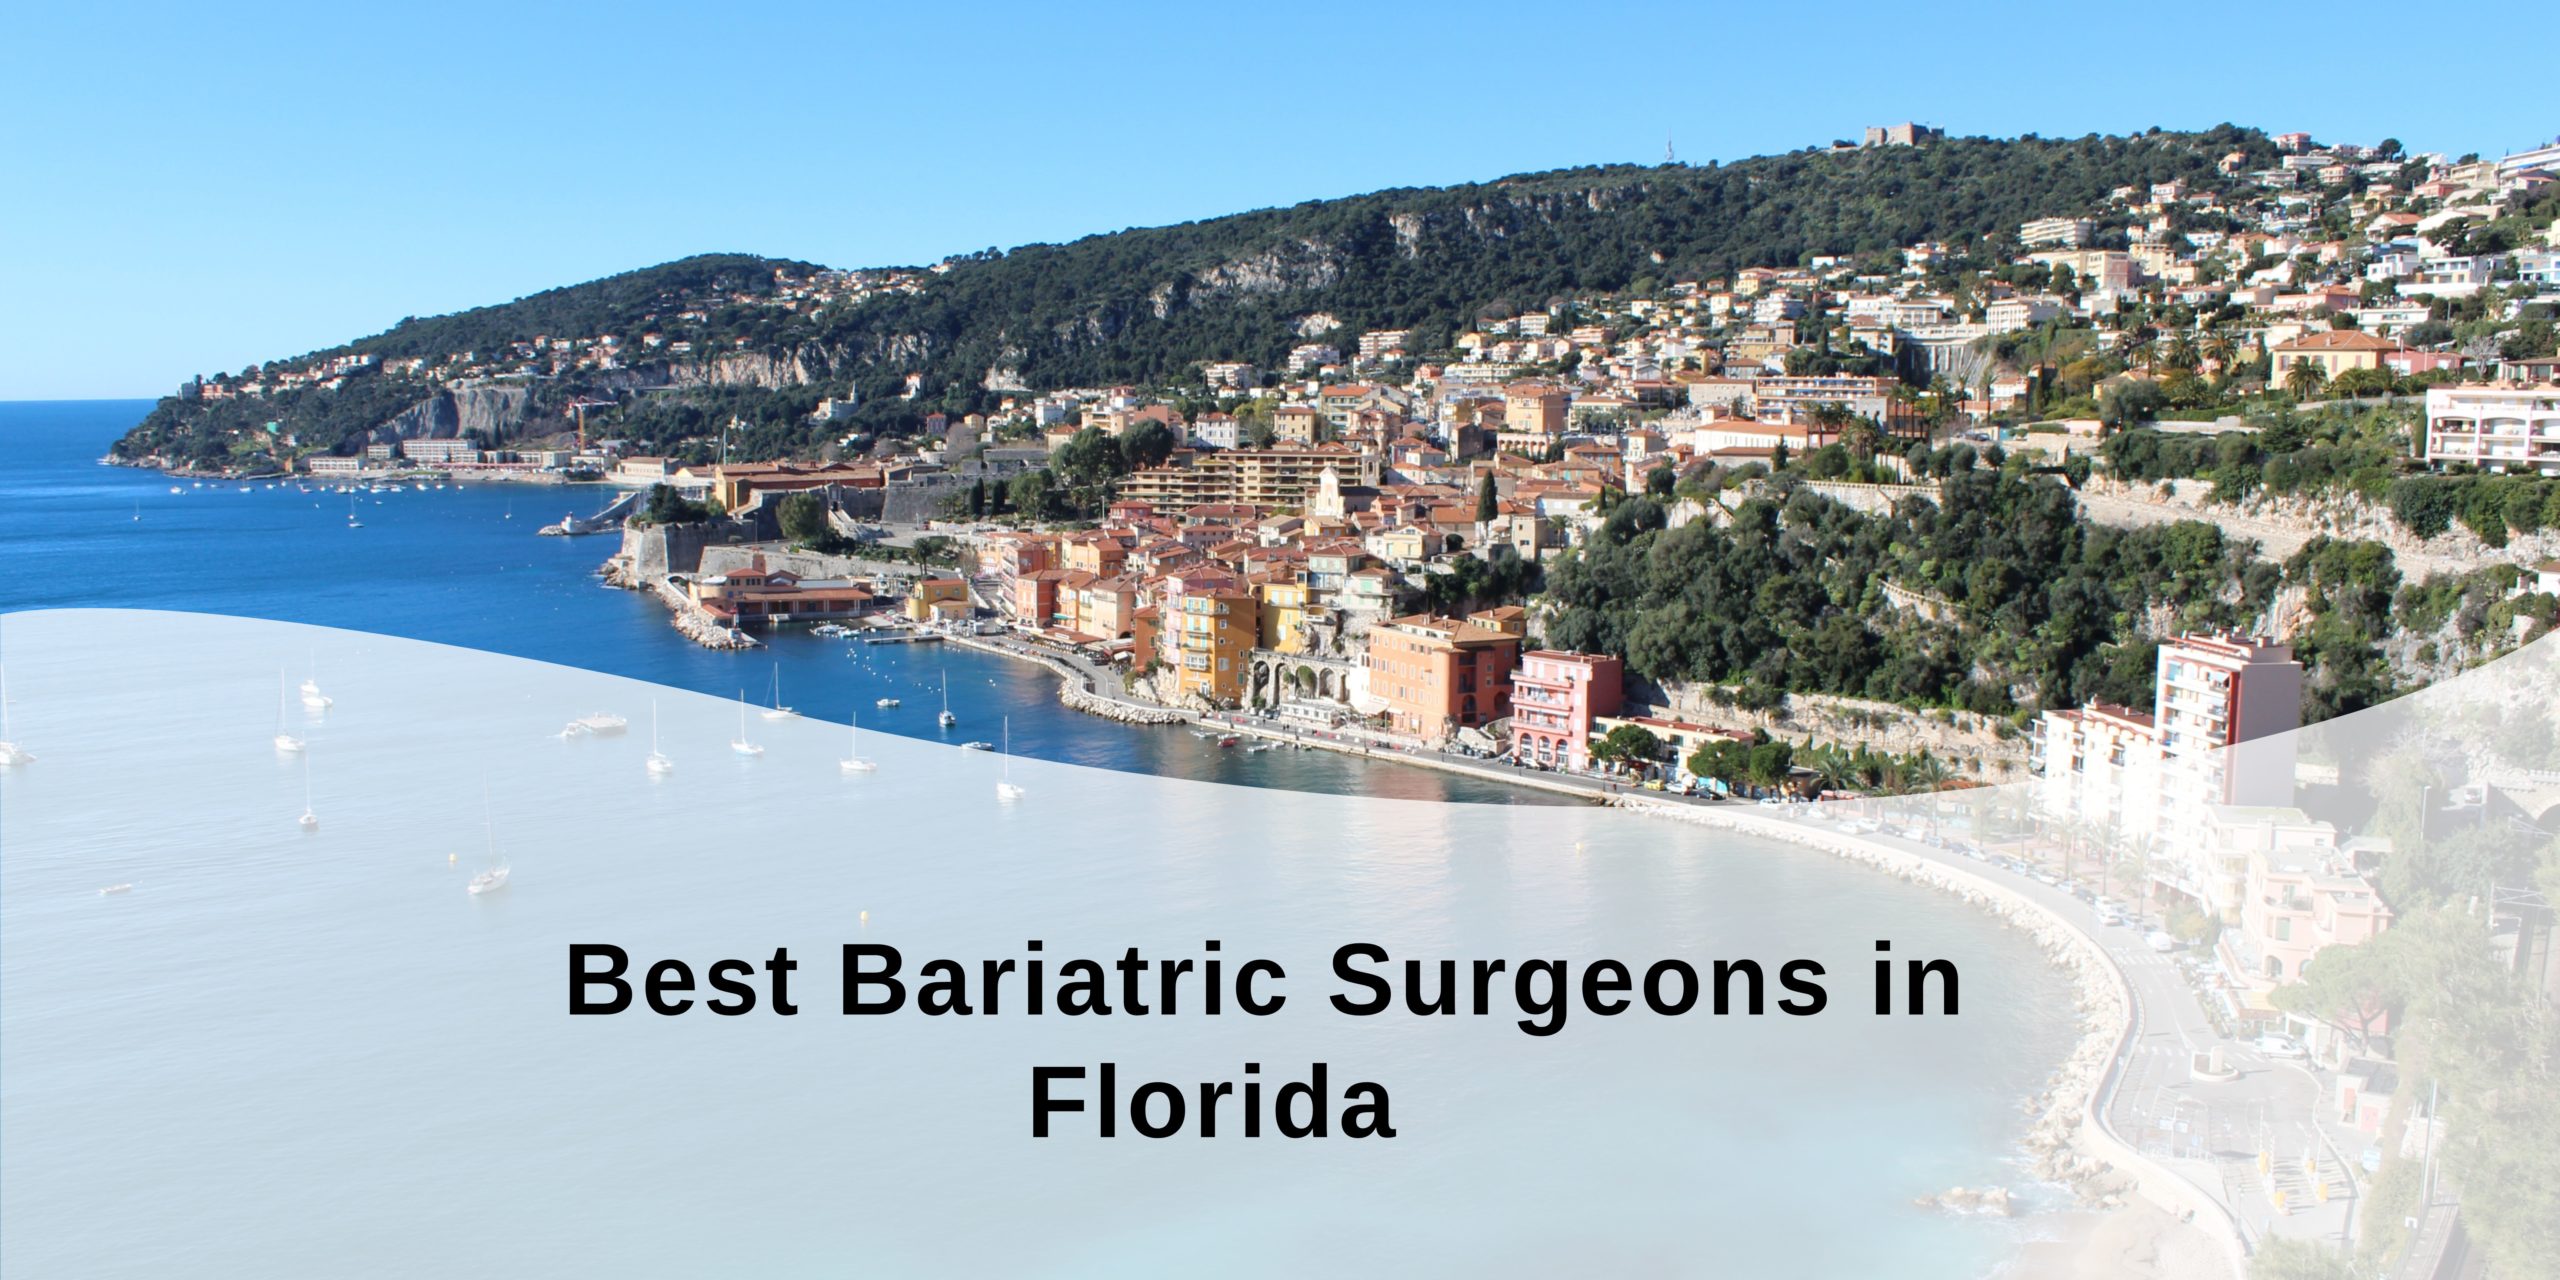 Best Bariatric Surgeons in Florida